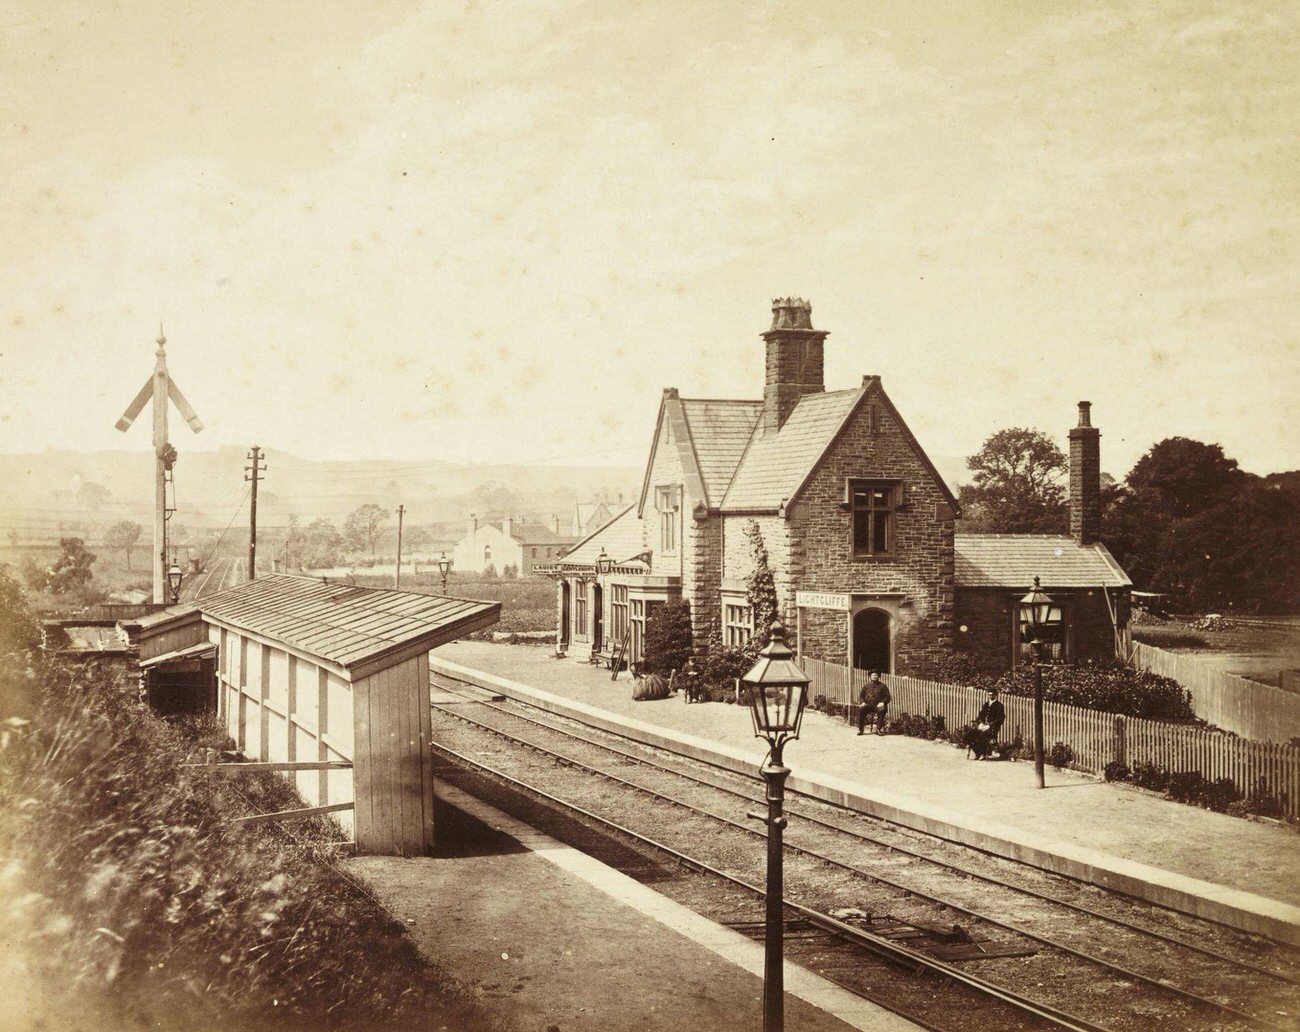 Lightcliffe Railway Station, circa 1855, by Samuel Smith.